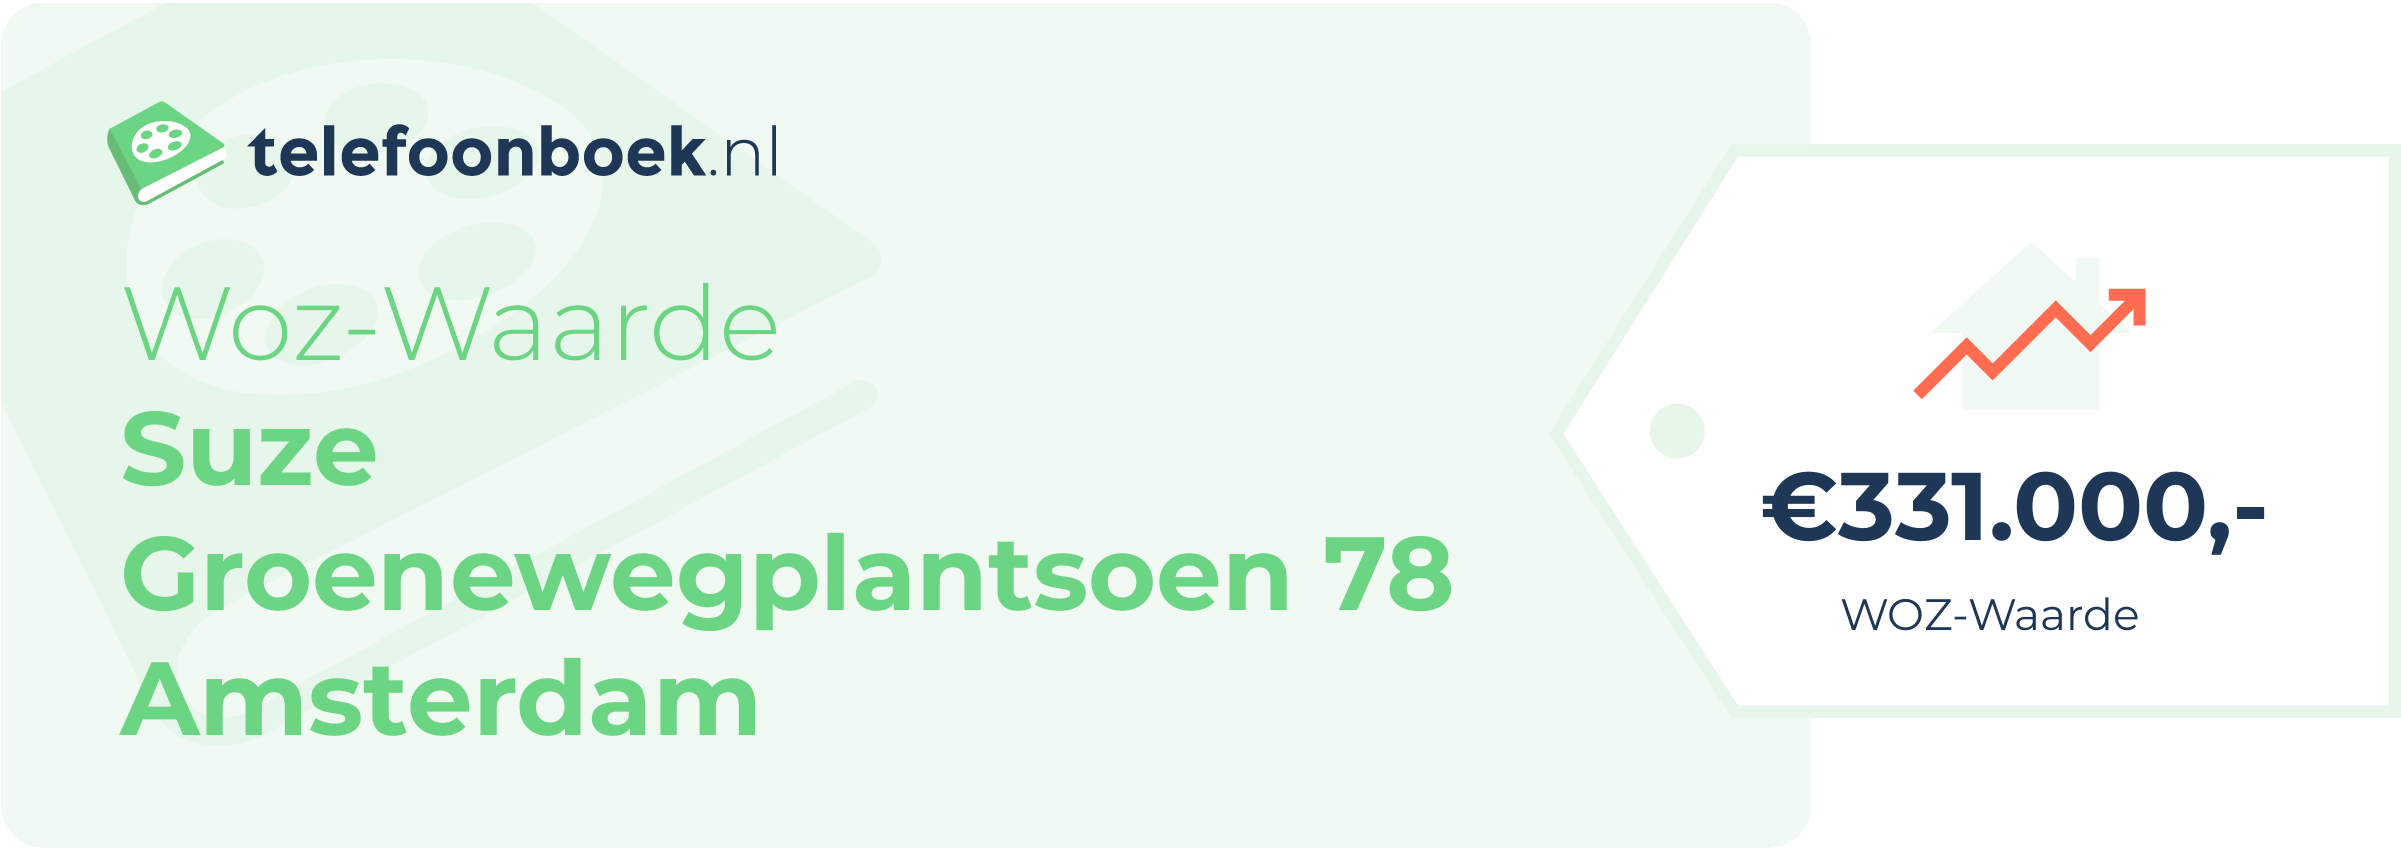 WOZ-waarde Suze Groenewegplantsoen 78 Amsterdam